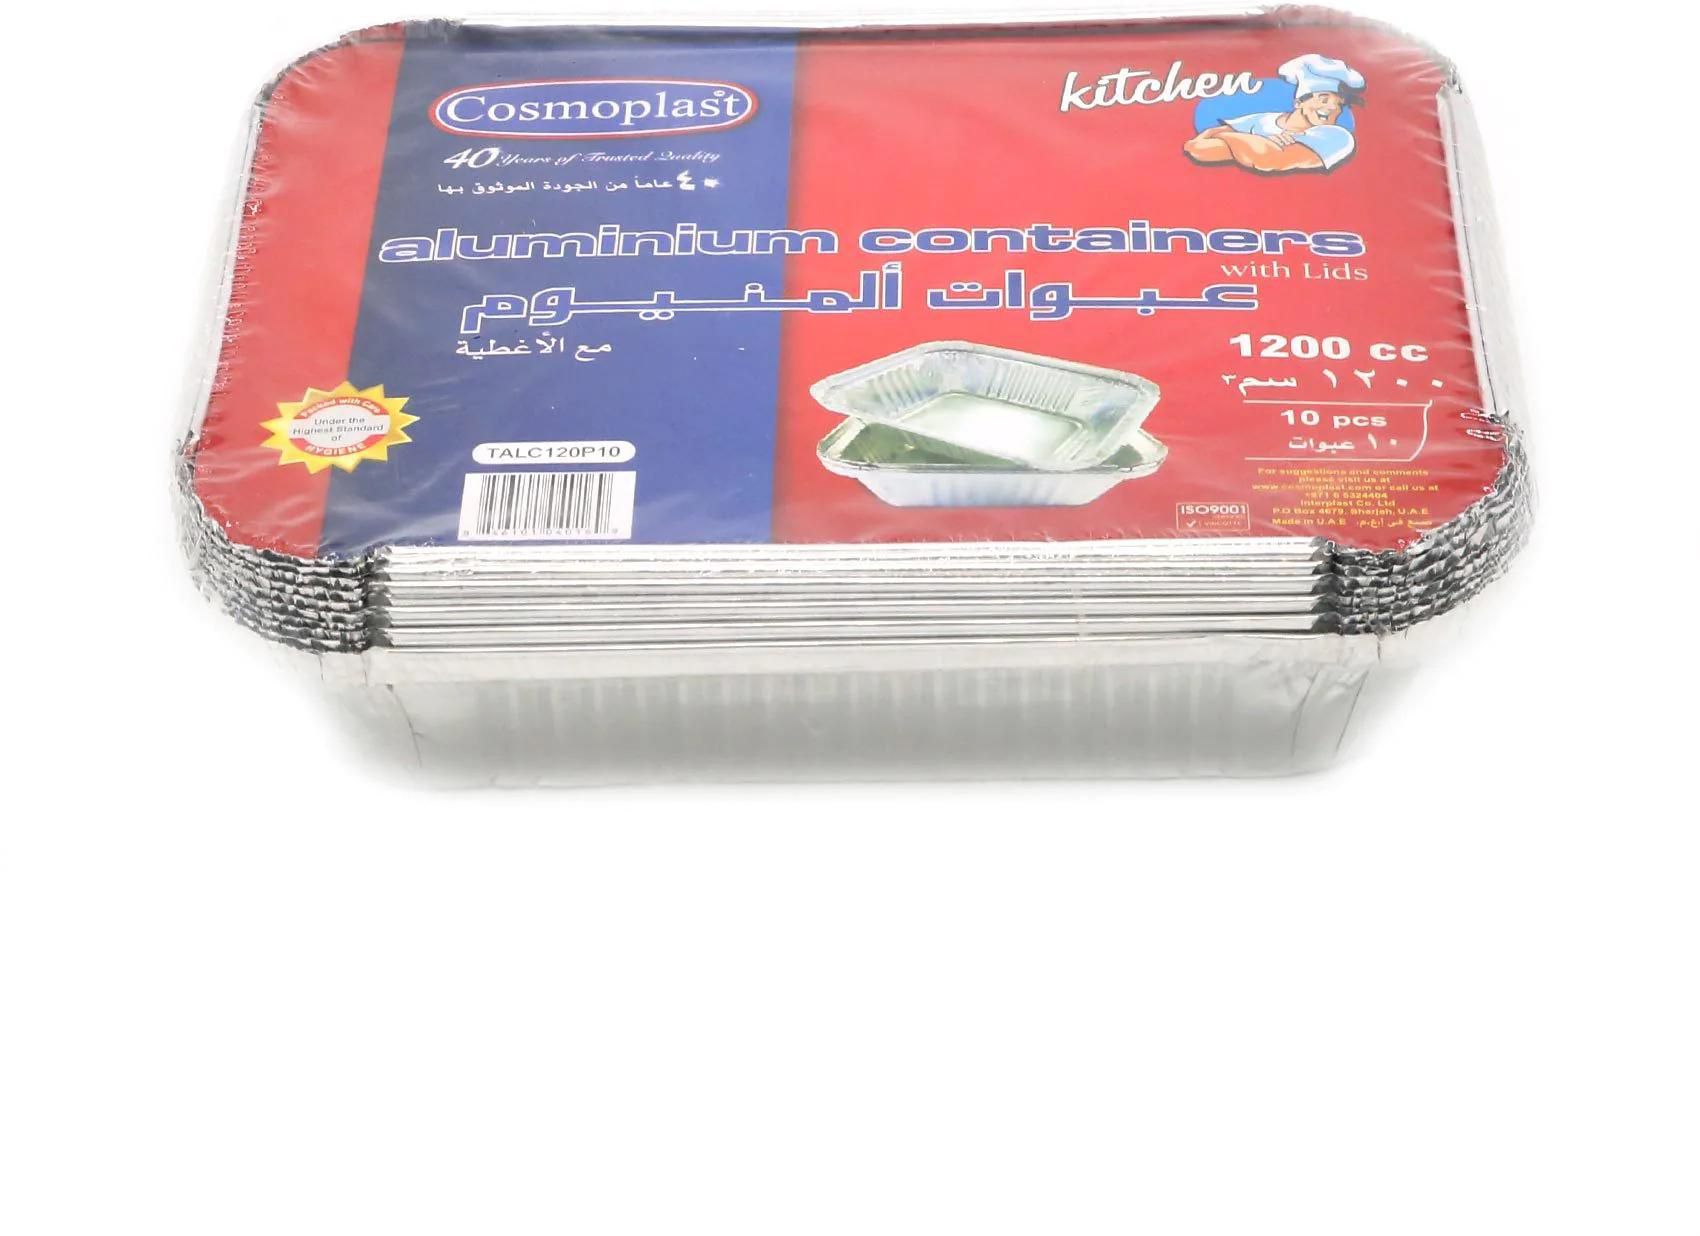 Cosmoplast aluminum container with lids 10 pieces